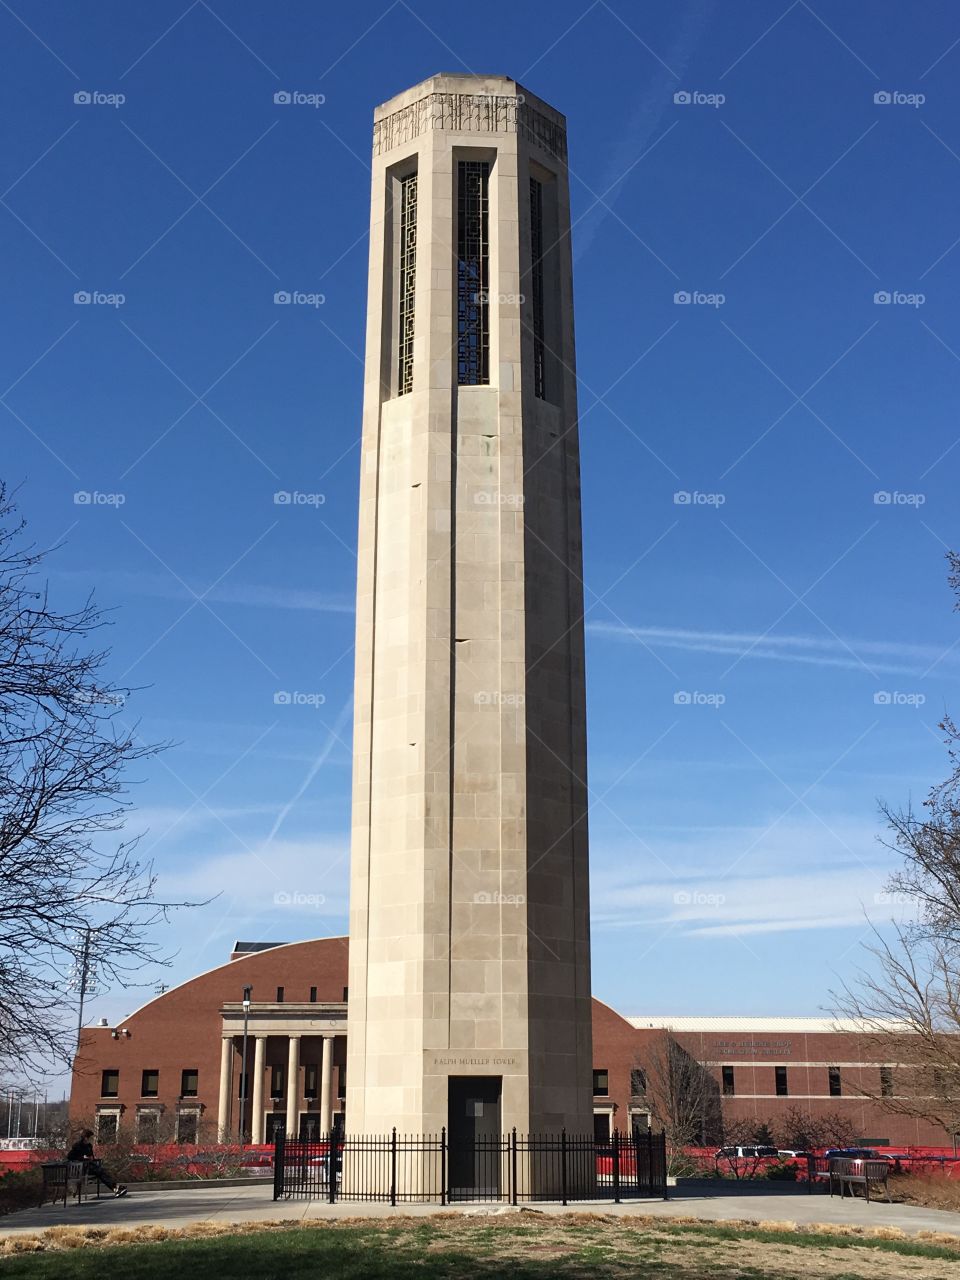 Carillon at University of Nebraska